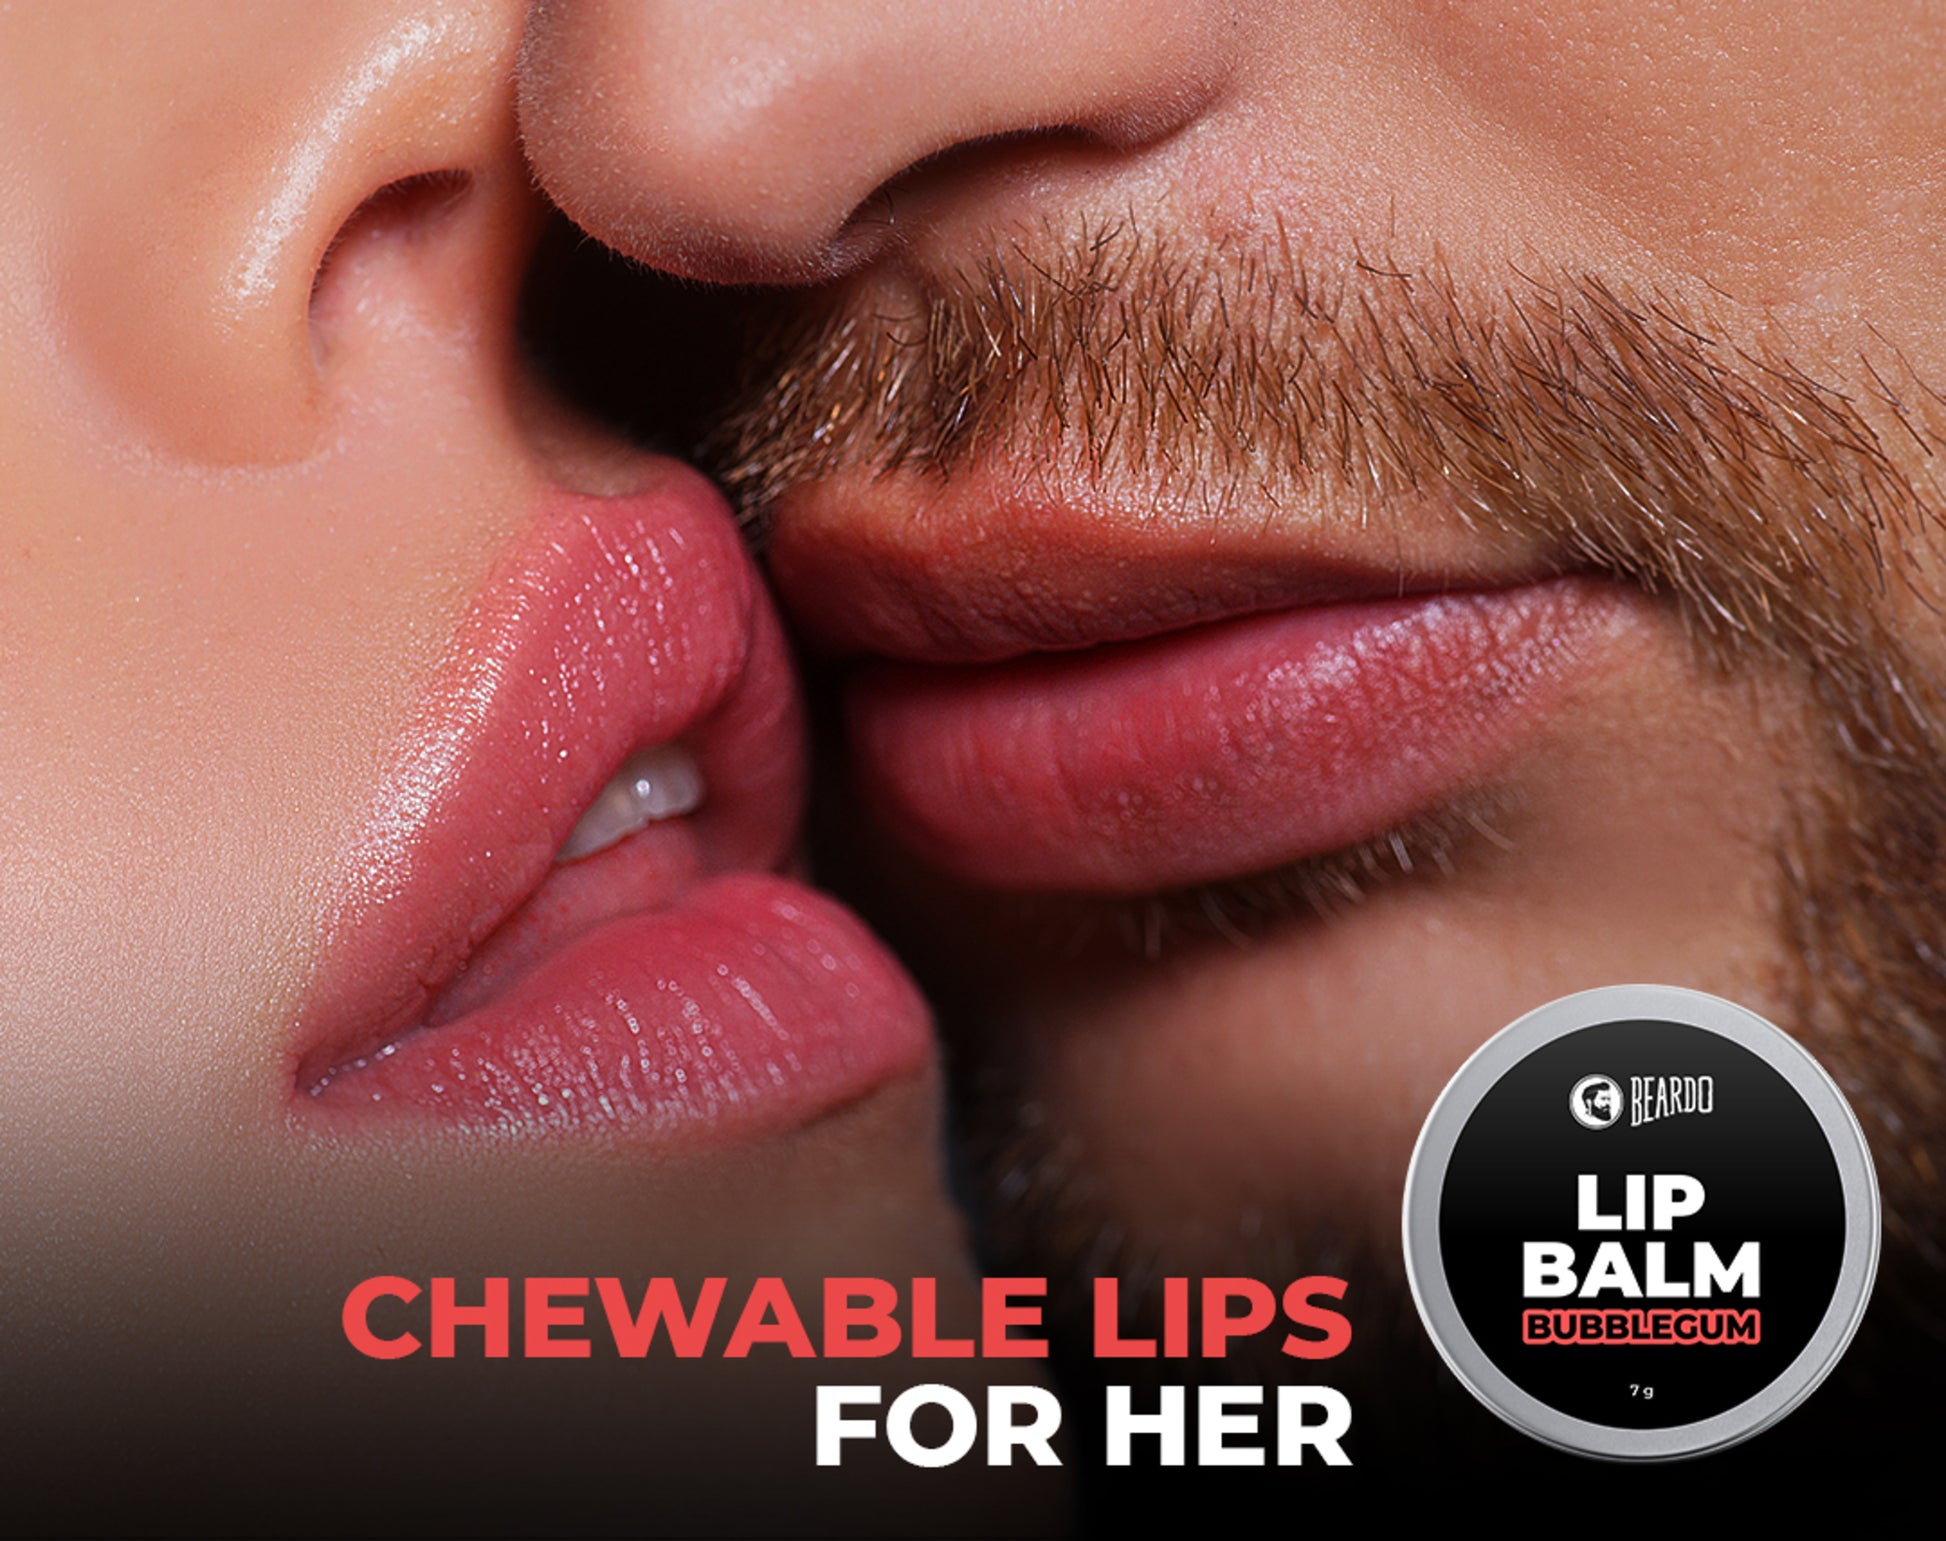  lip care for men, lip balm for men, bubblegum lip balm